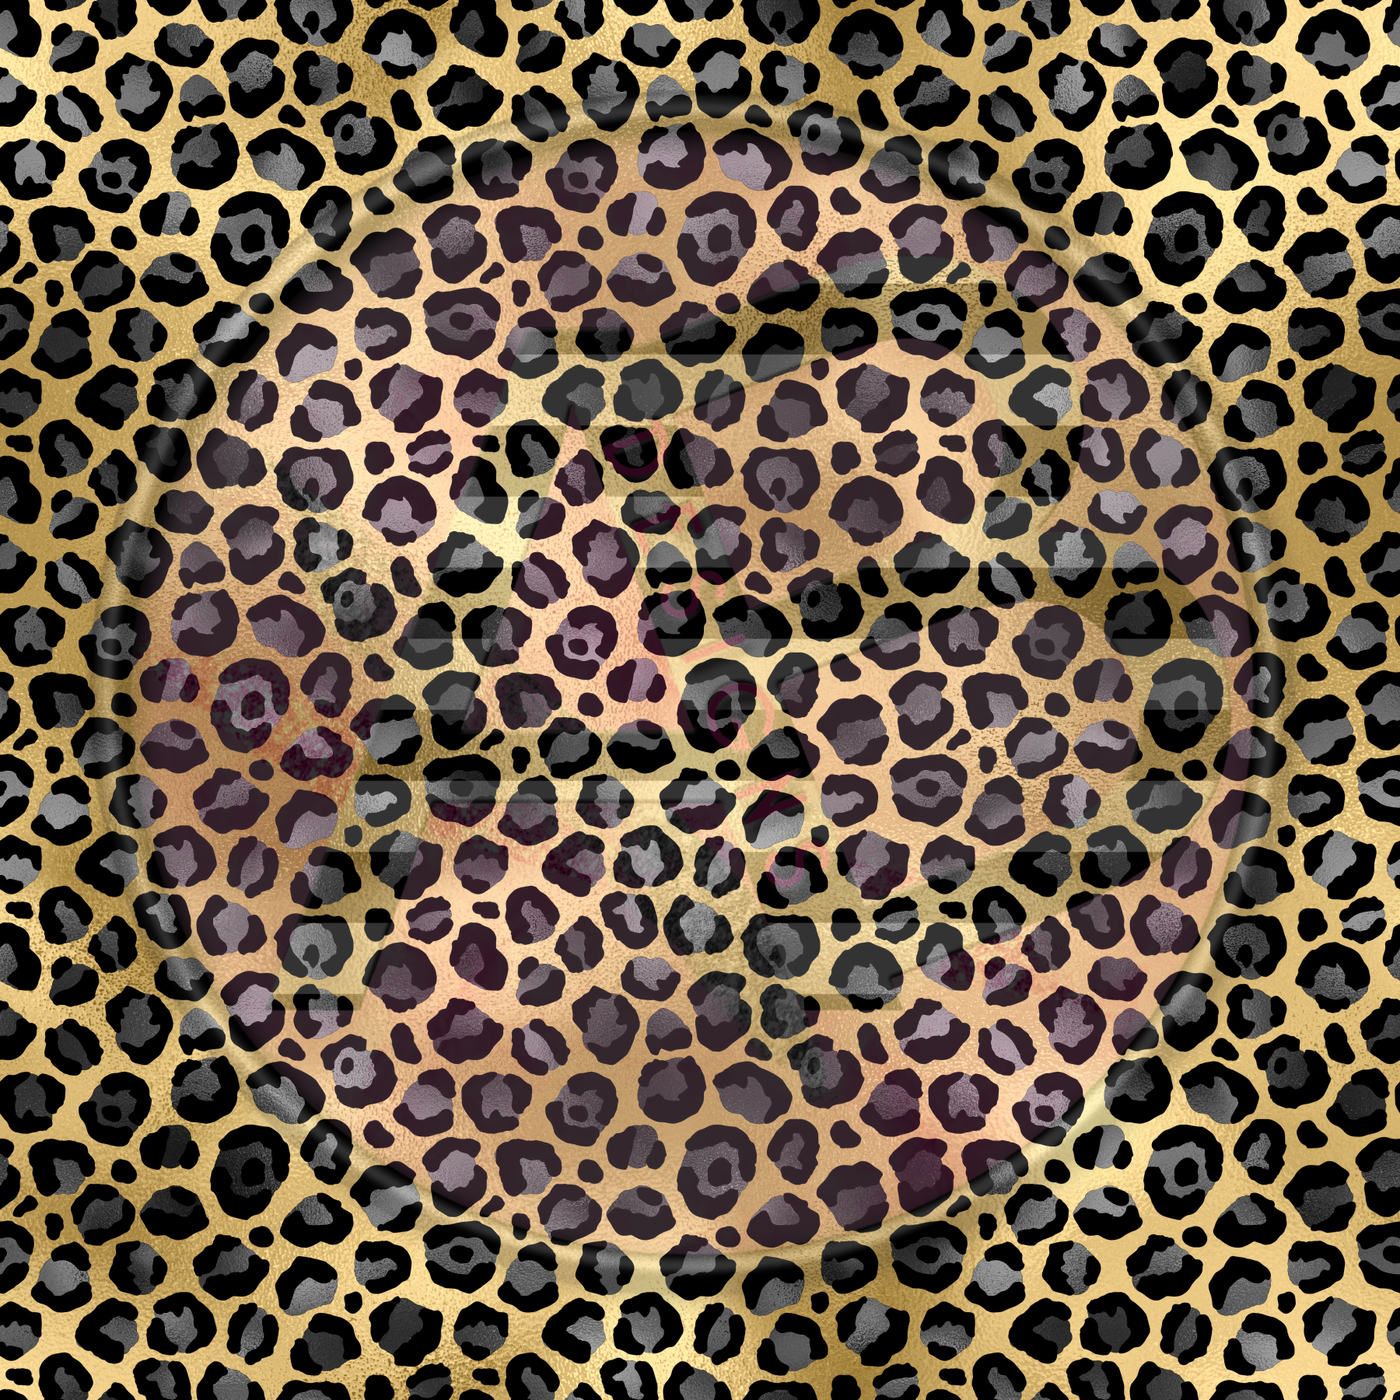 Adhesive Patterned Vinyl - Cheetah 221